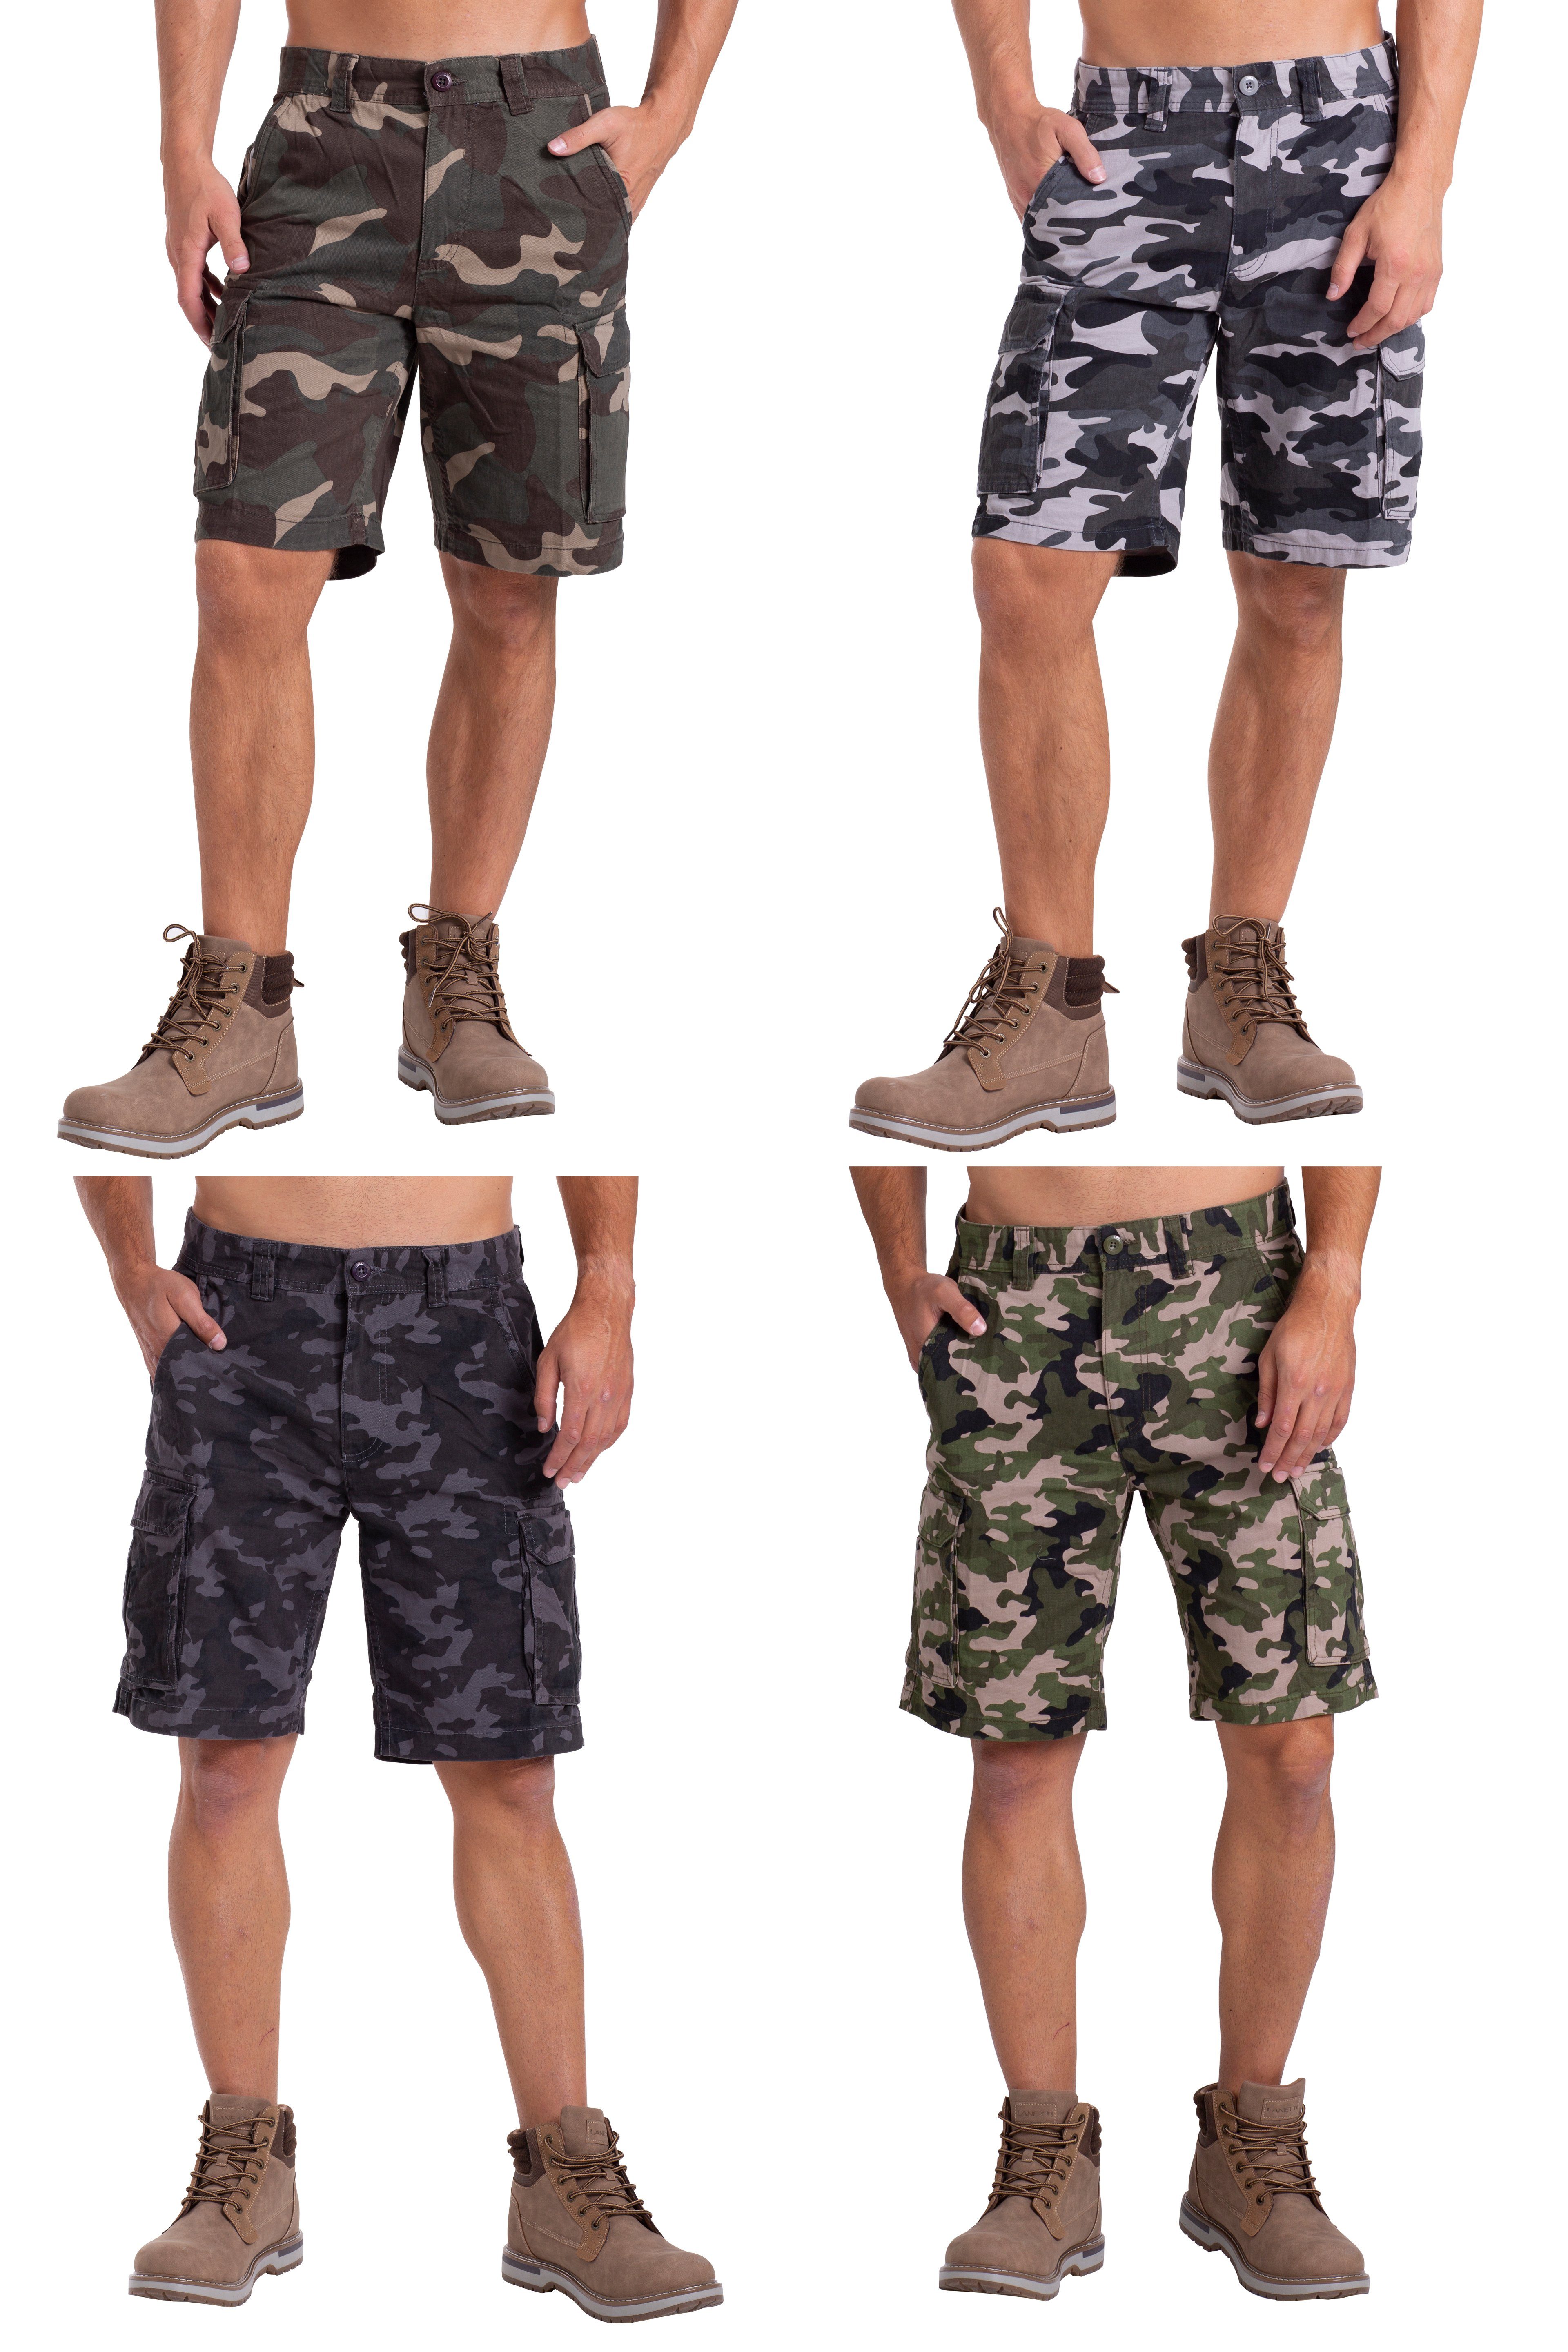 Herren Bermuda Hose Shorts Dehnbund Camouflage Army Jogginghose Sweat Pants Kurz